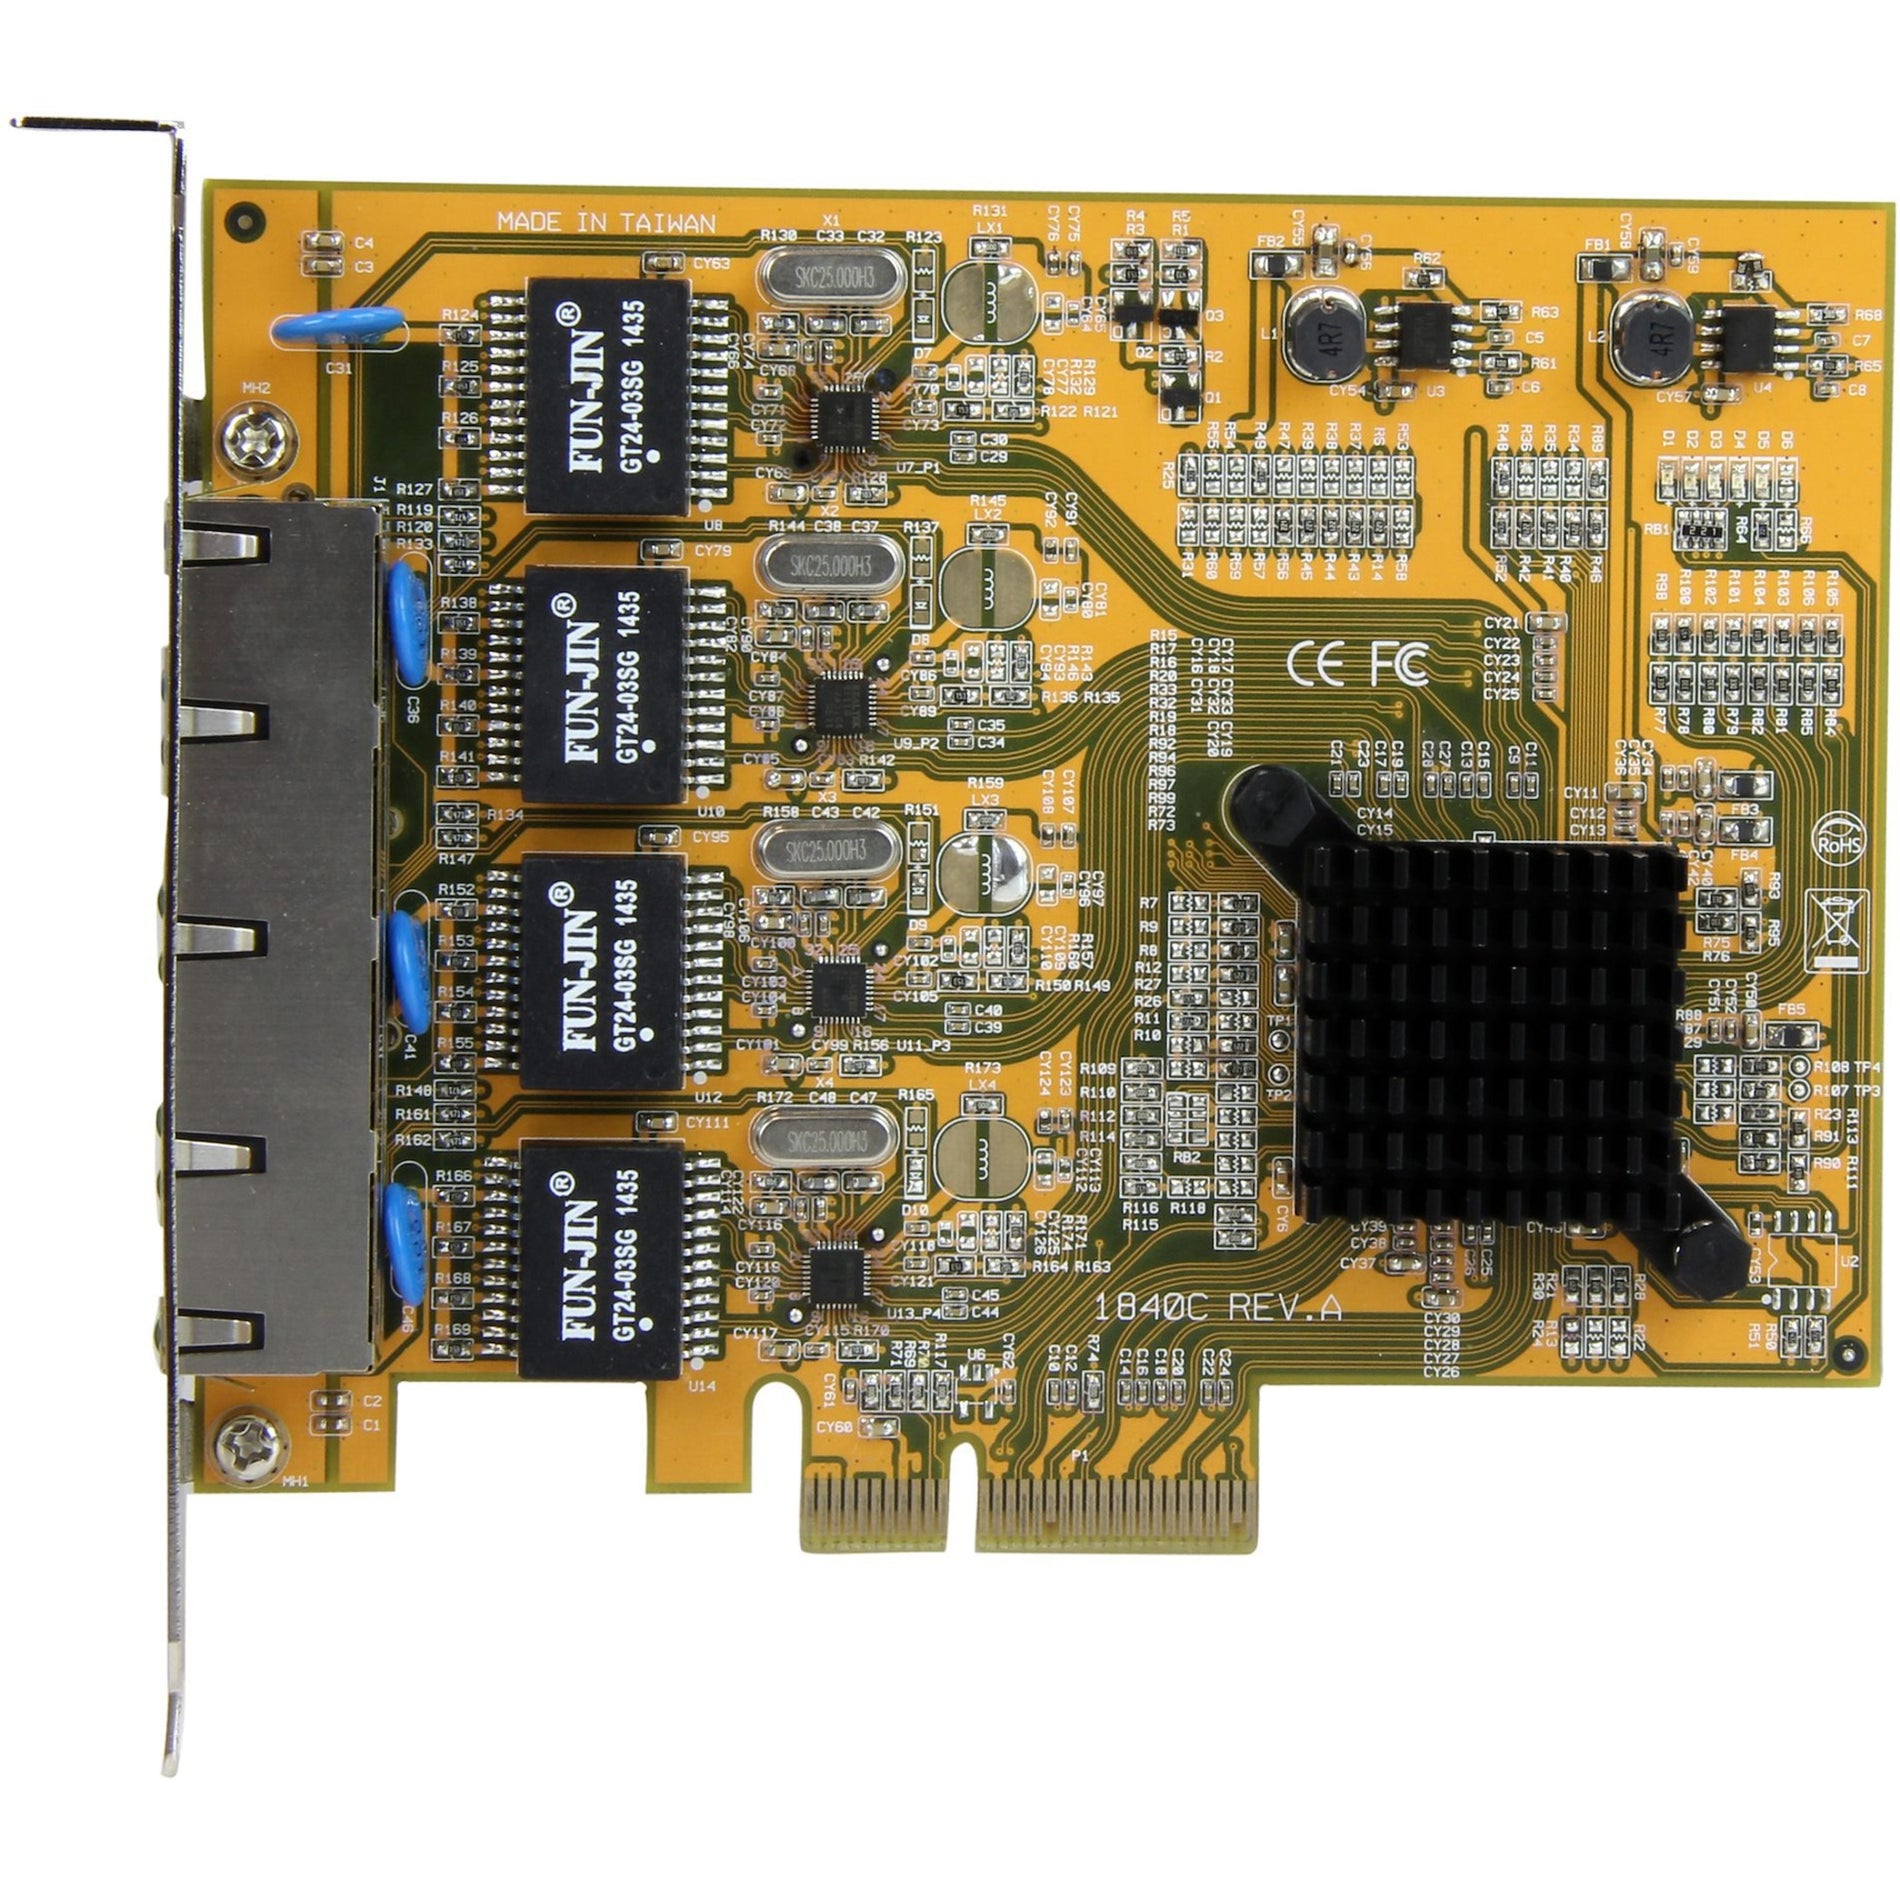 StarTech.com ST1000SPEX43 4-Port PCIe Gigabit Network Adapter Card, Quad-Port PCIe Gigabit NIC